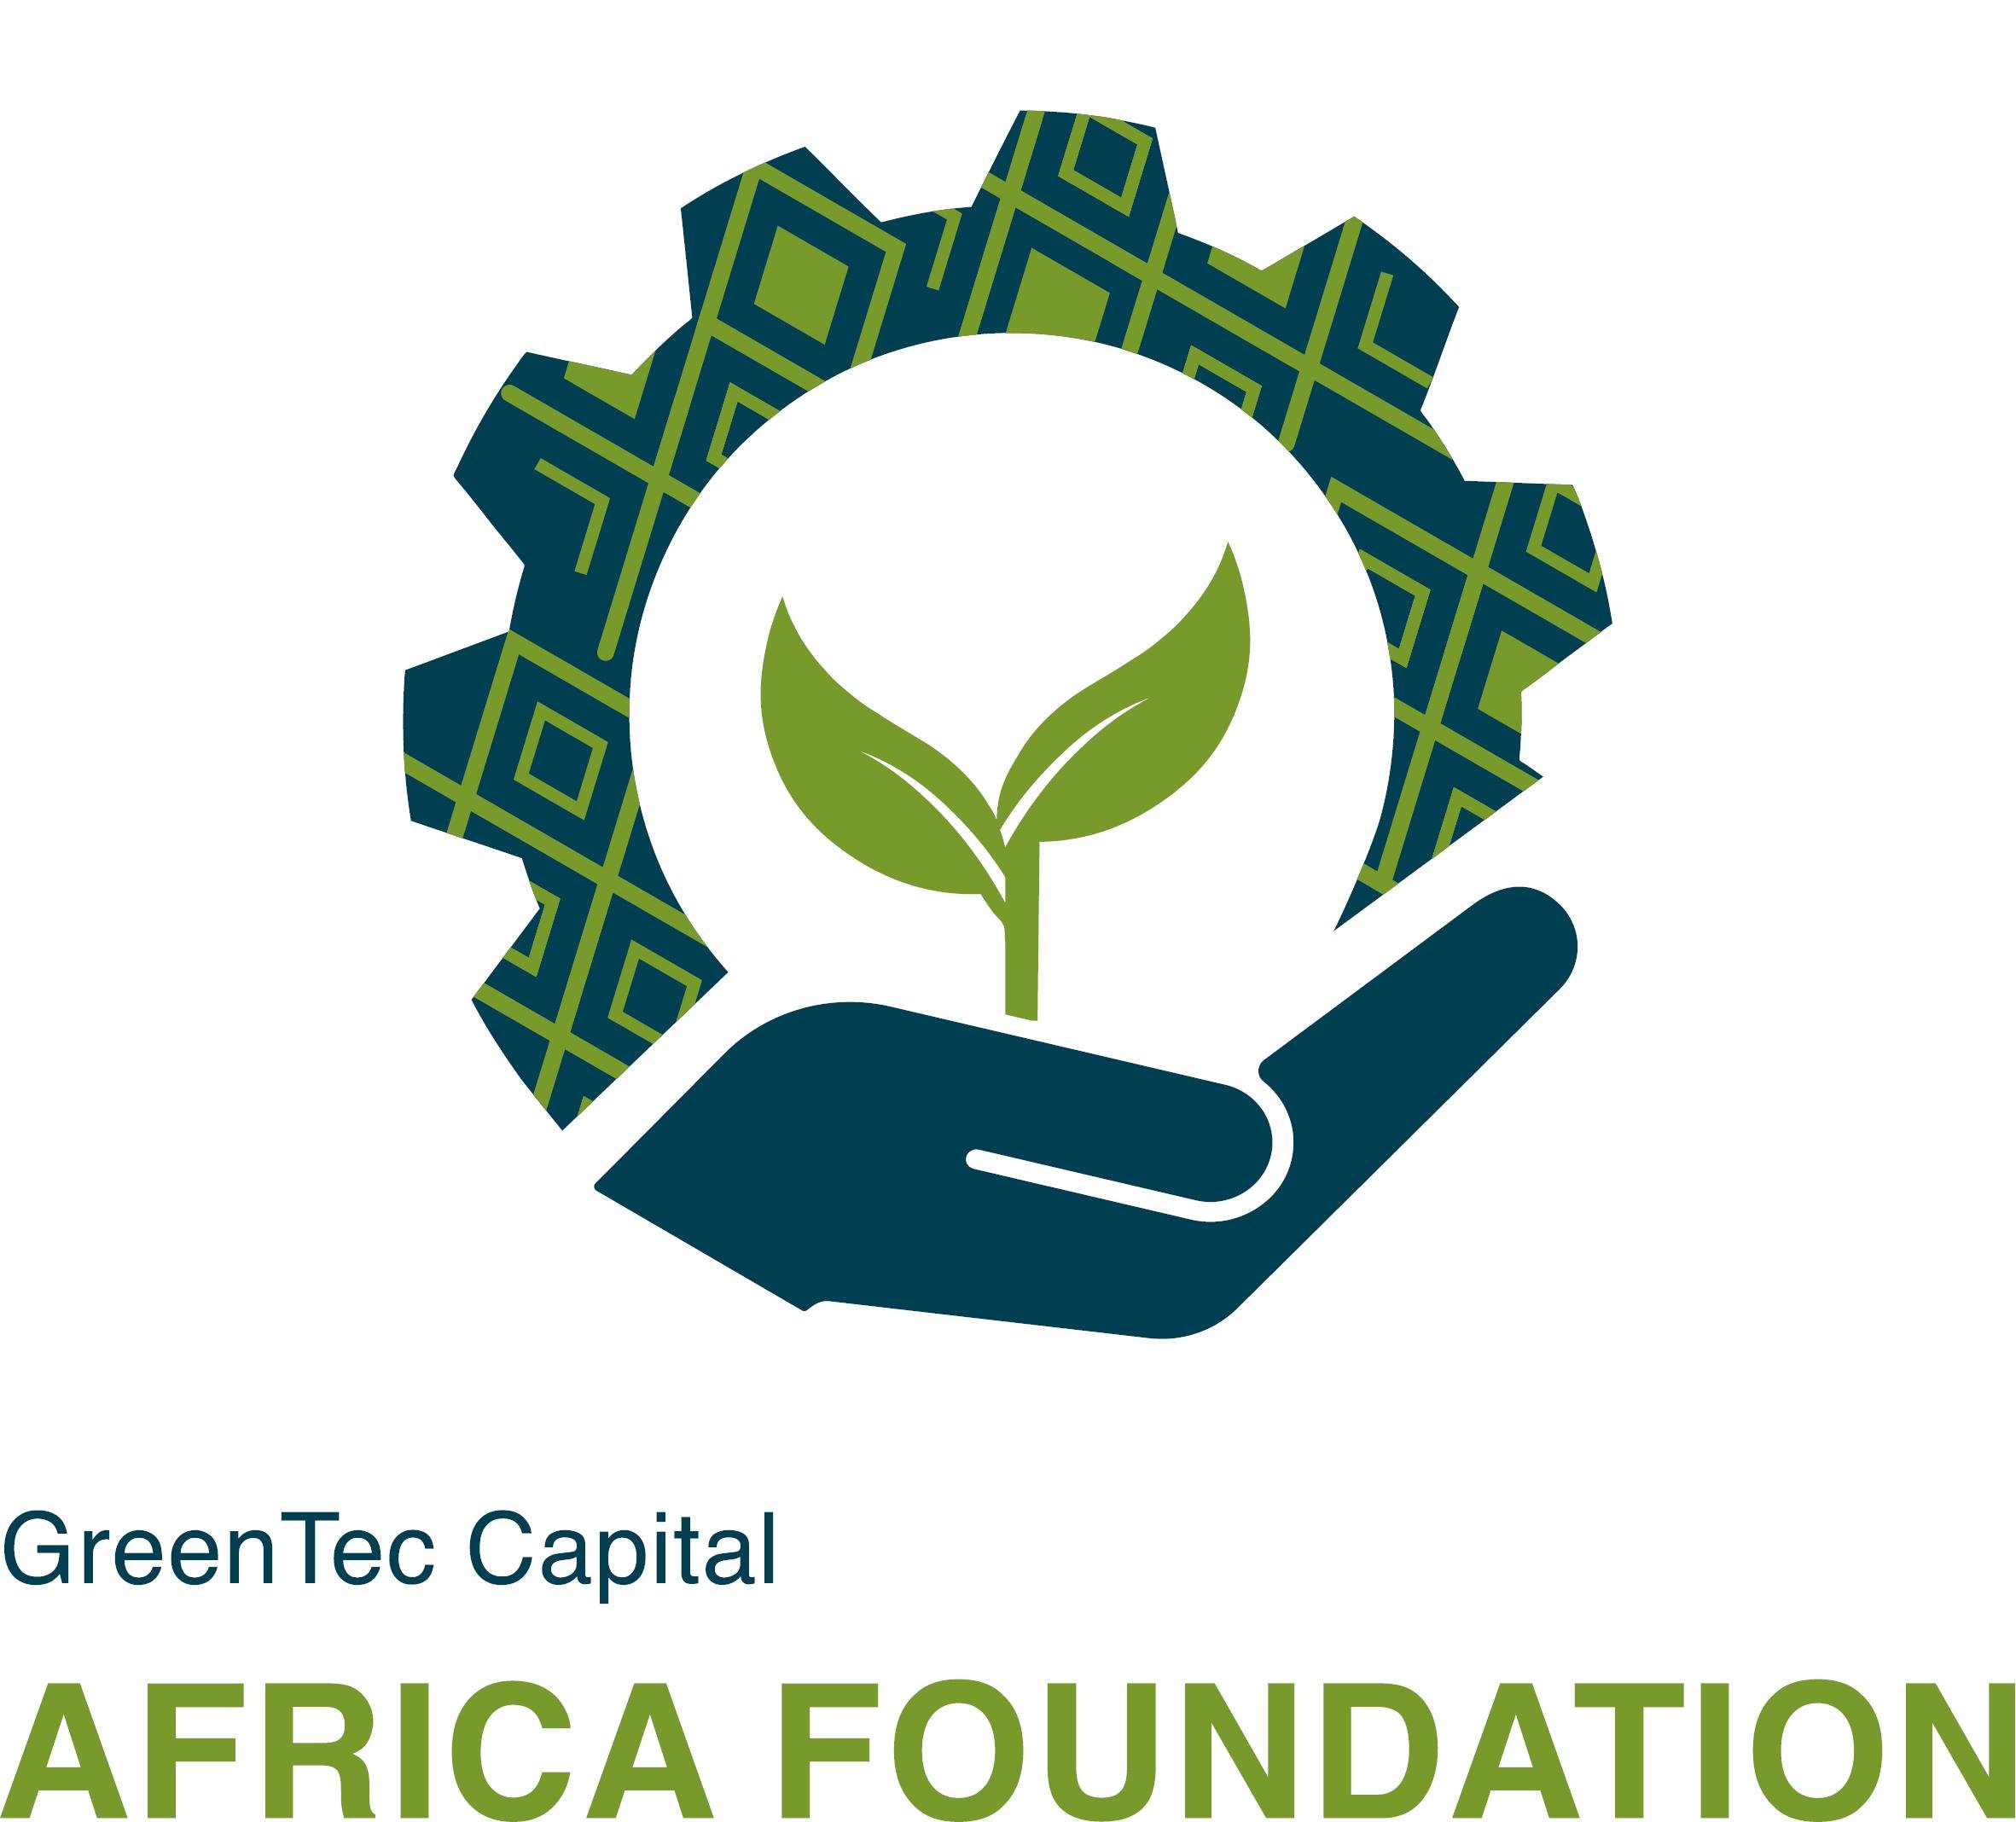 GreenTec Capital Africa Foundation